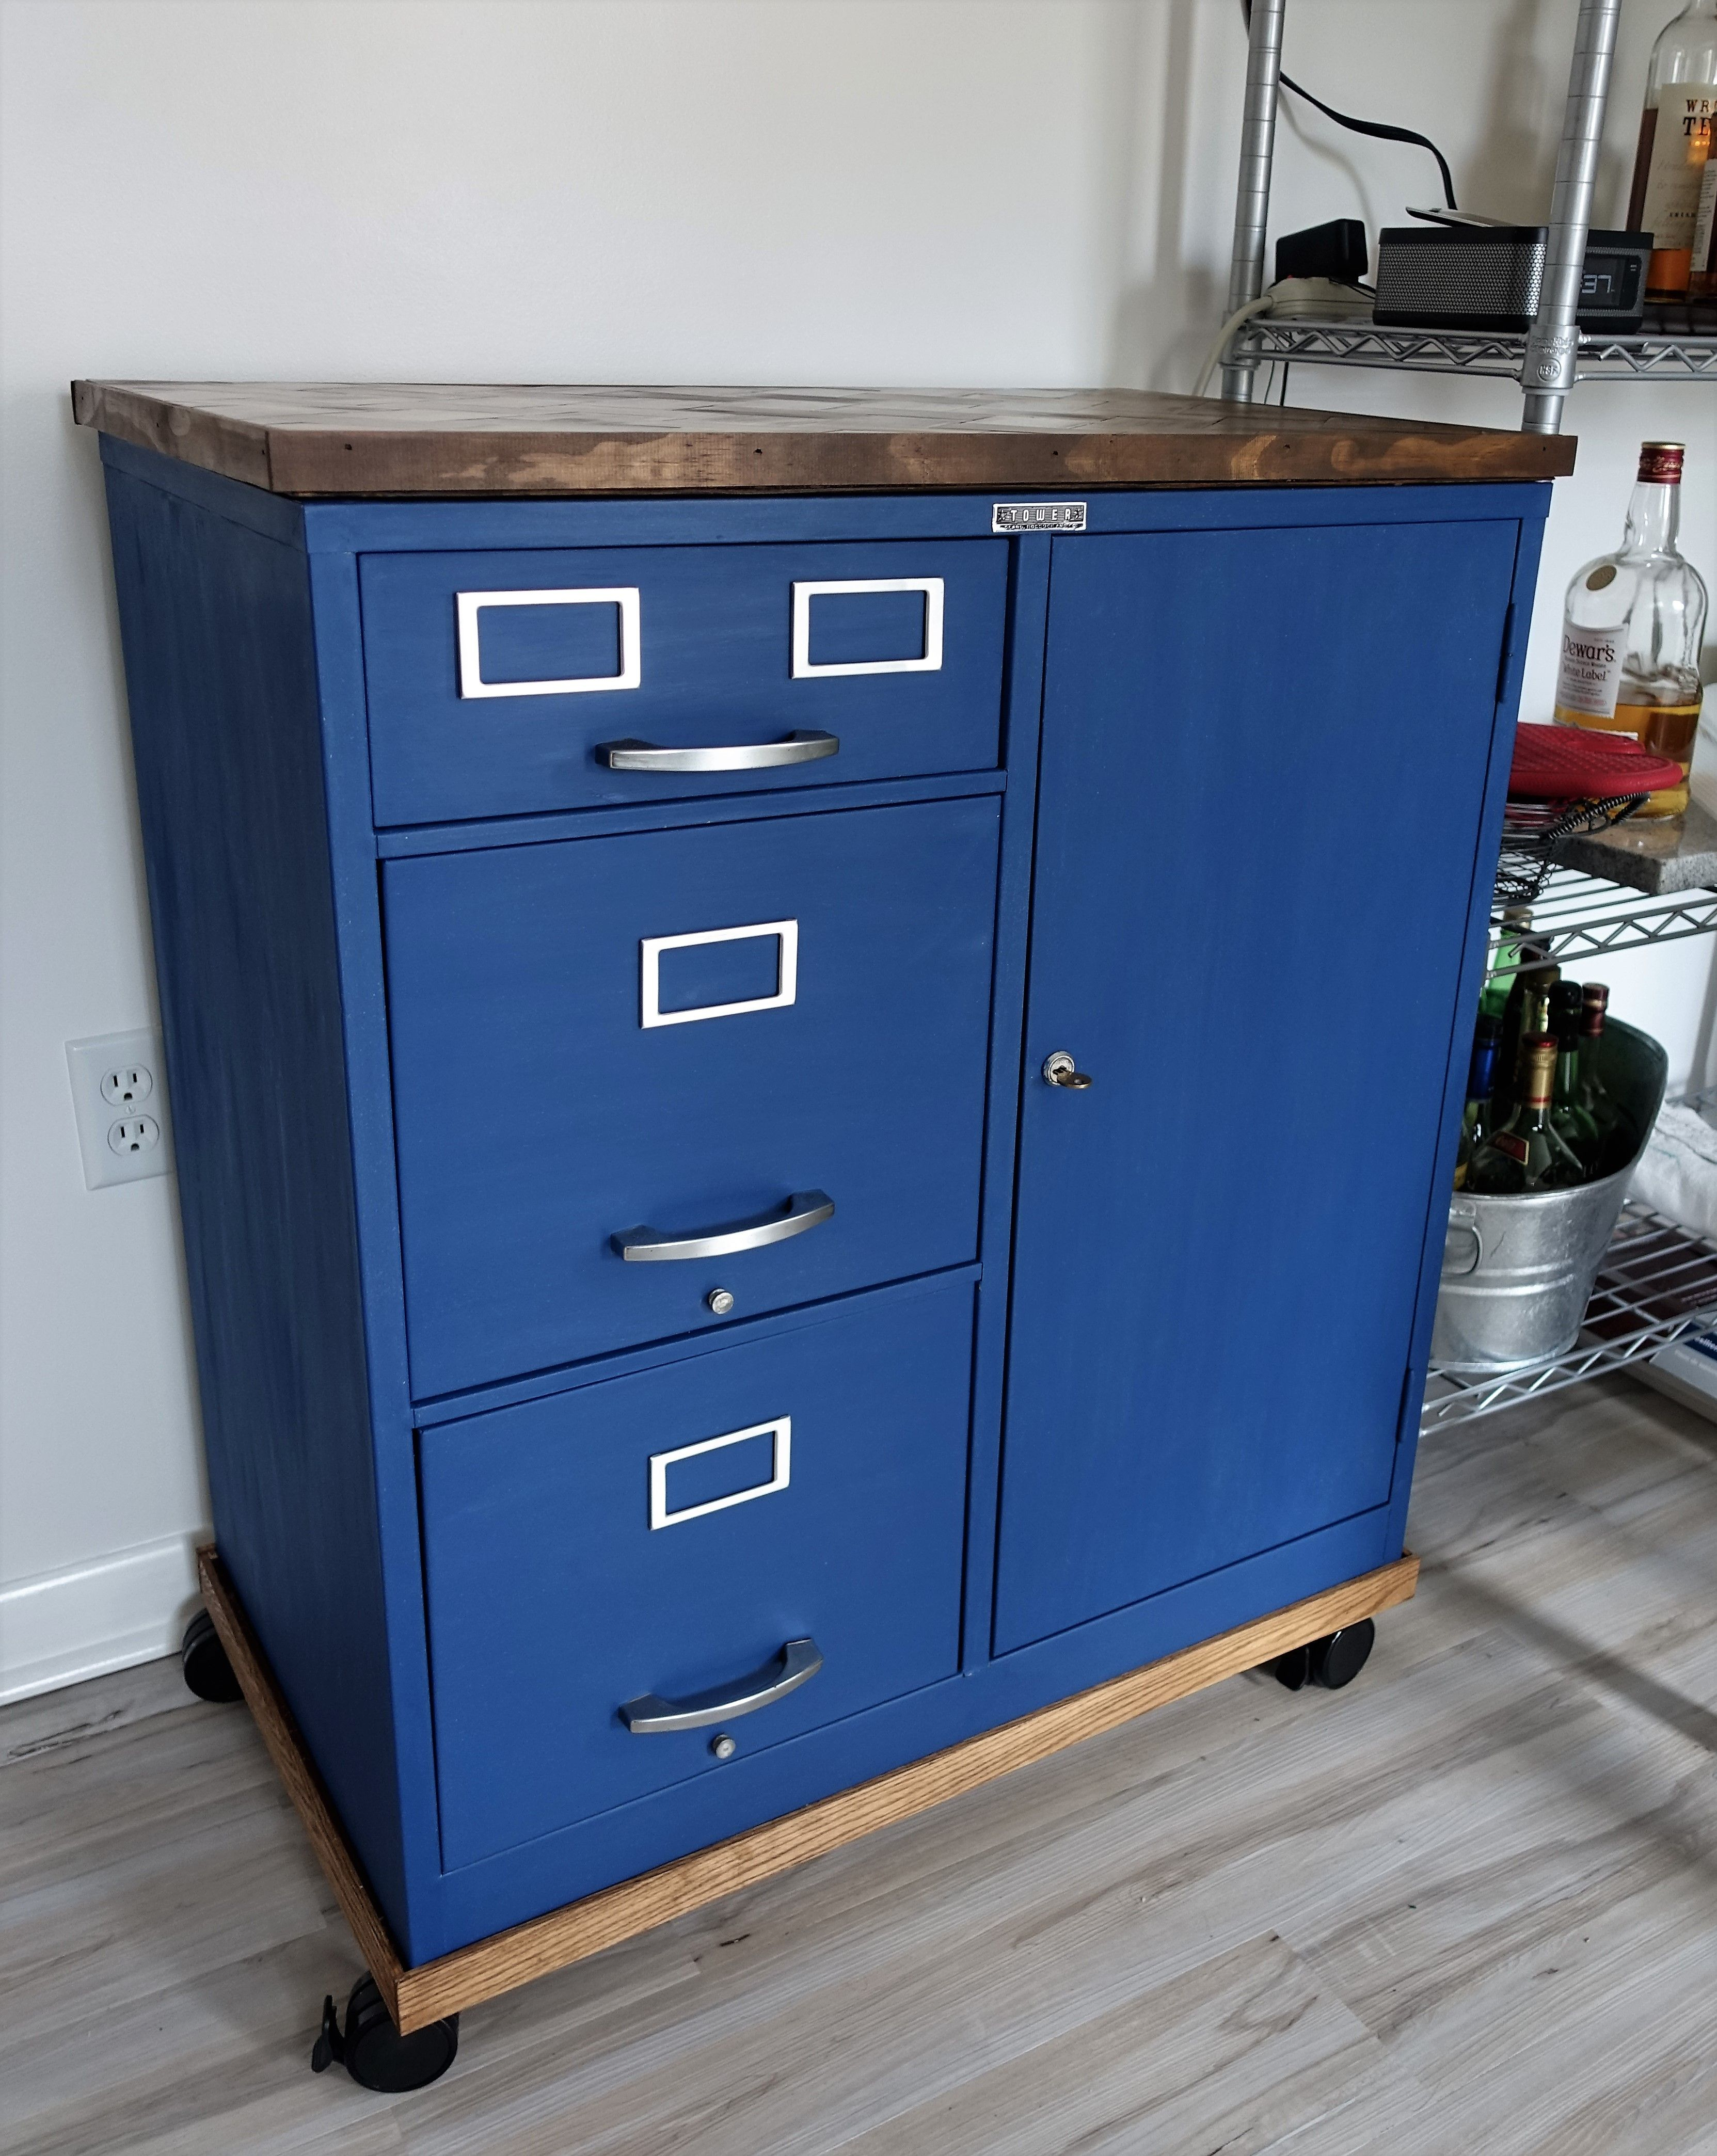 Pin Carol Stratford On Diy Furniture Ideas Diy Kitchen Cabinets pertaining to size 3326 X 4177